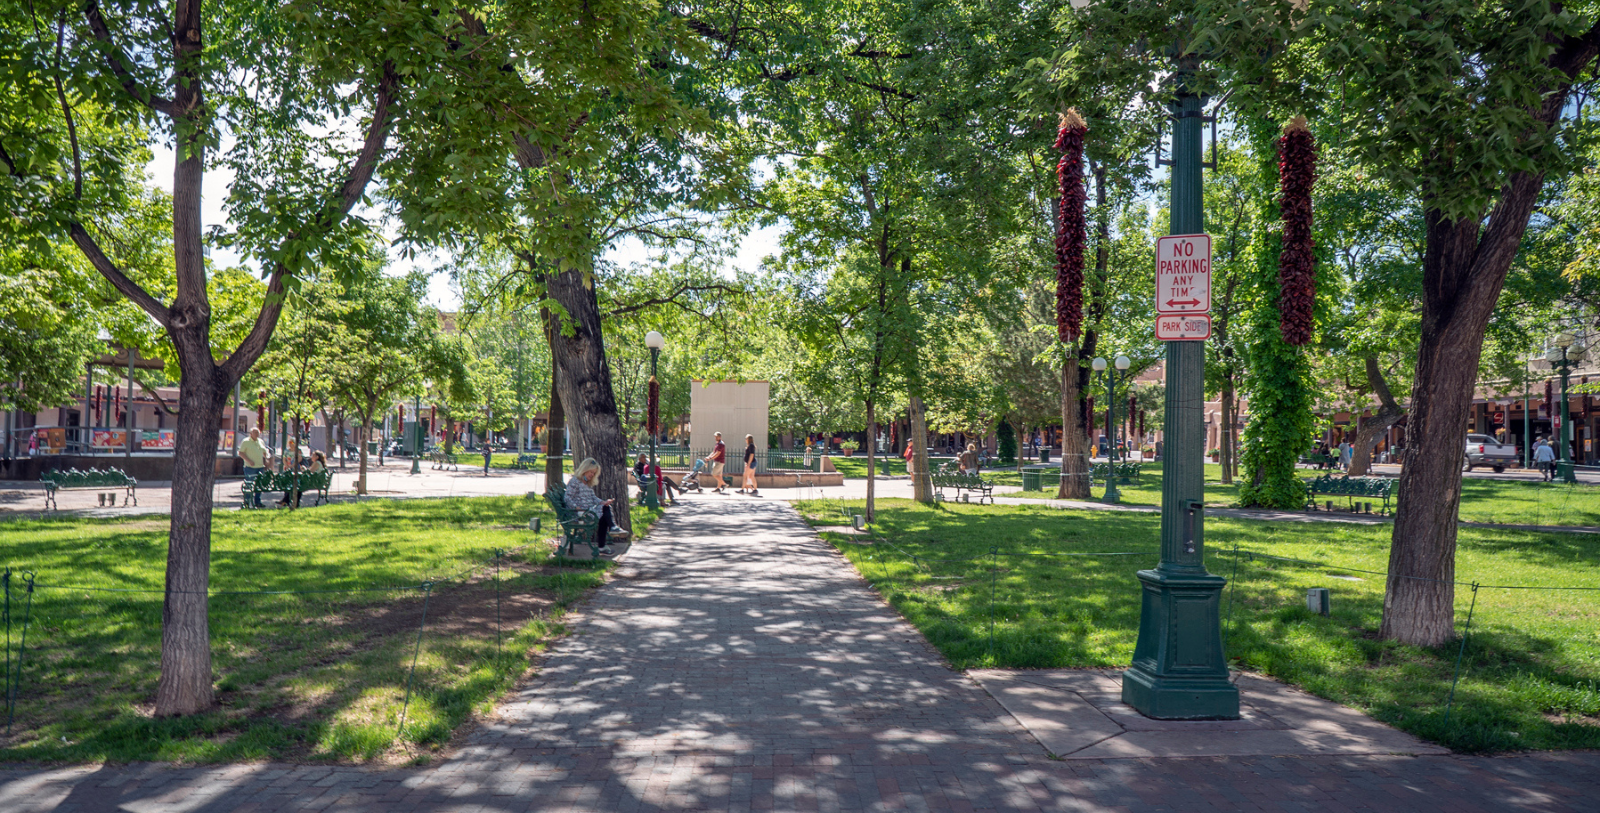 Explore the Santa Fe Plaza, a U.S. National Historic Landmark.